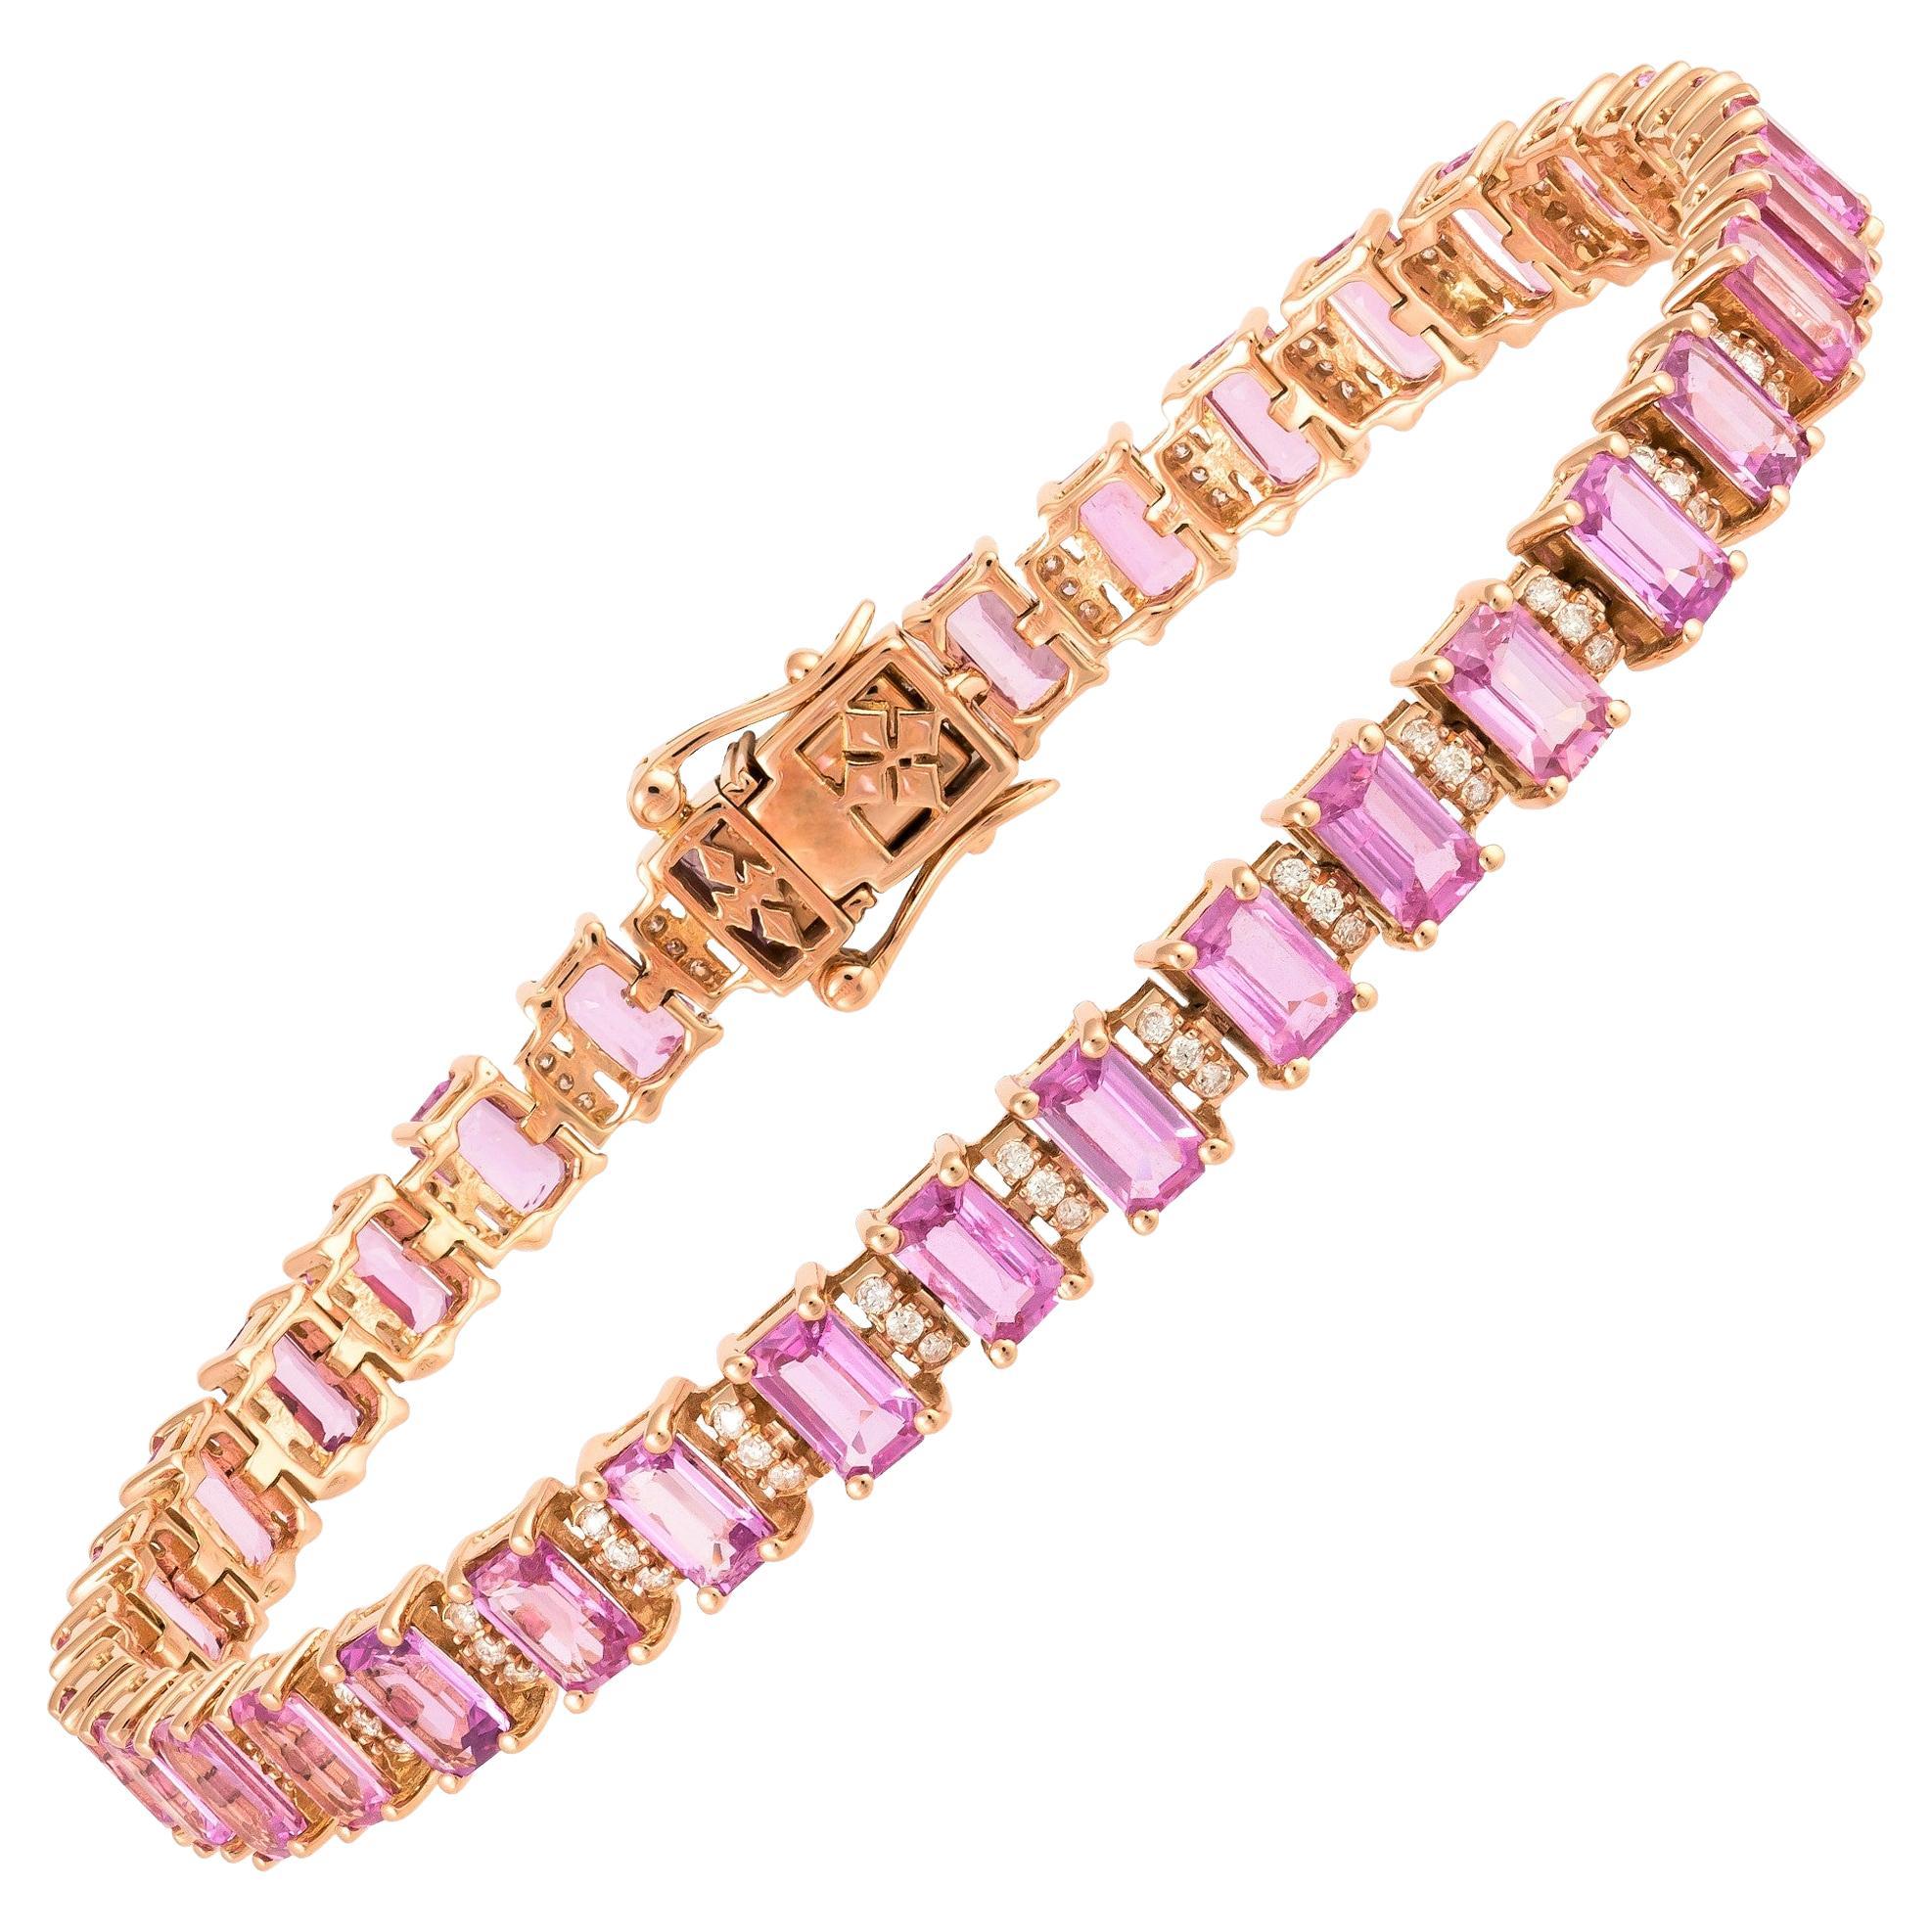 NEU $12,500 18KT Ausgefallenes, glitzerndes, rosafarbenes Saphir-Diamant-Armband